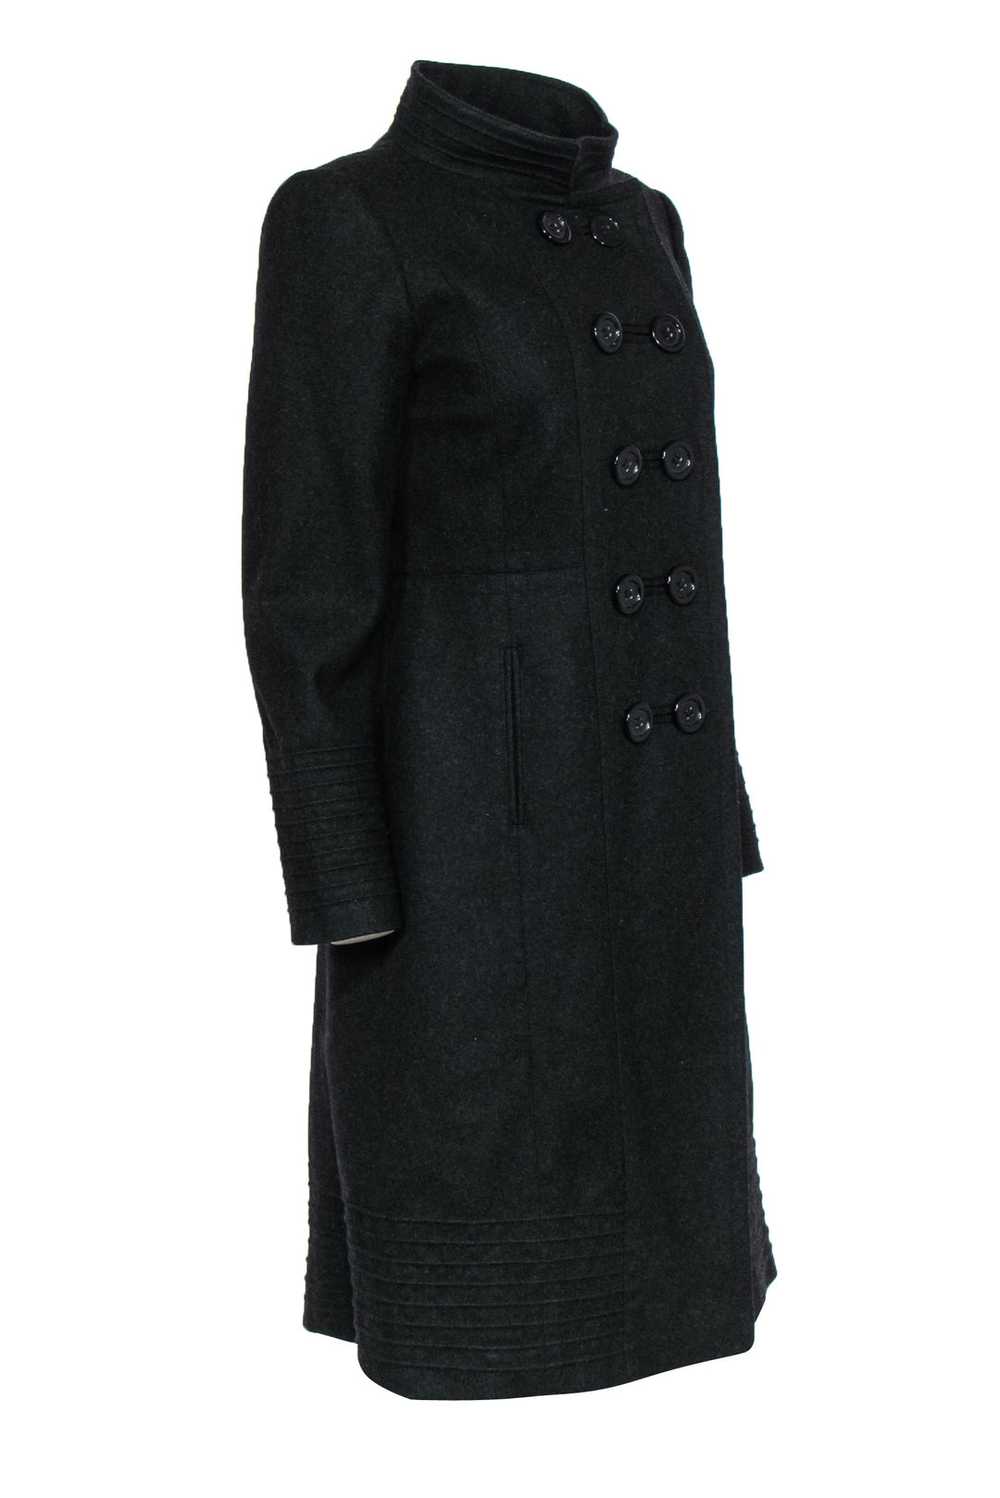 Antonio Melani - Black Wool Blend Double Breasted… - image 2